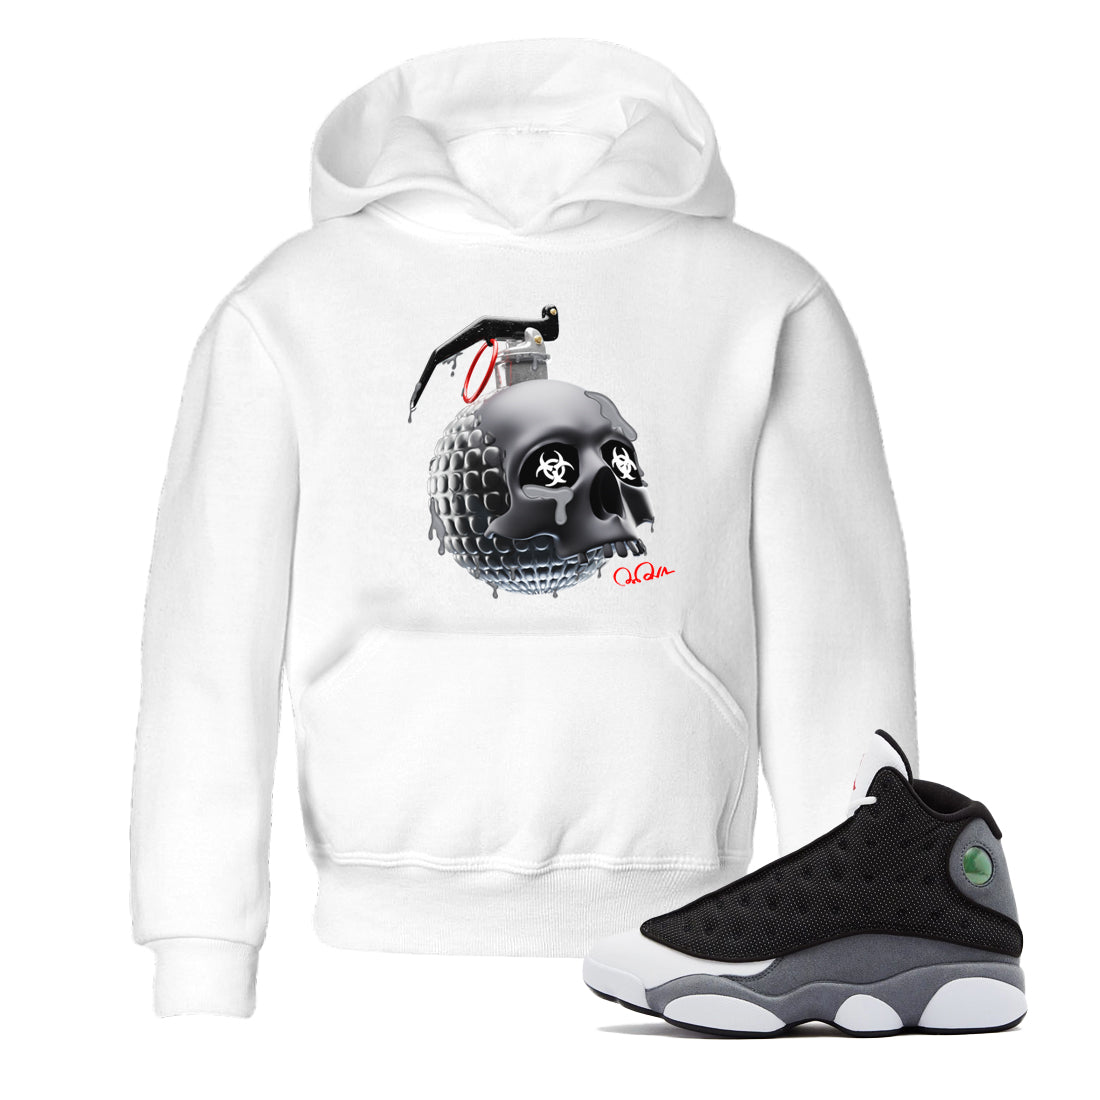 Air Jordan 13 Black Flint Sneaker Tees Drip Gear Zone Skull Bomb Sneaker Tees AJ13 Retro Black Flint Shirt Kids Shirts White 1